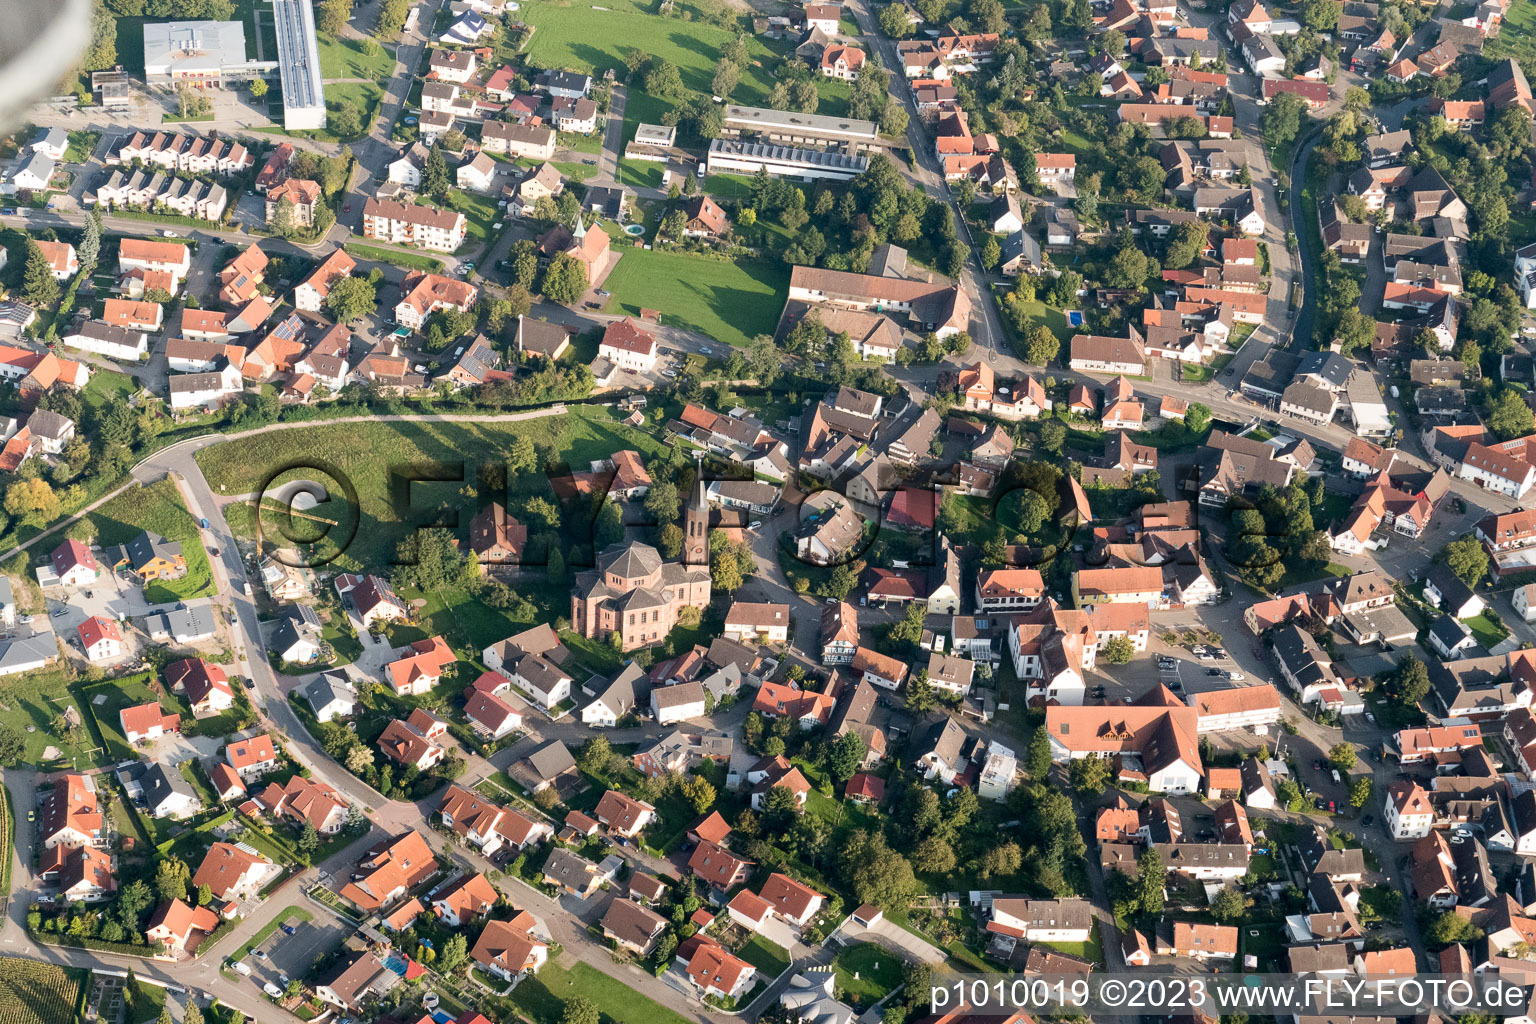 District Rheinbischofsheim in Rheinau in the state Baden-Wuerttemberg, Germany from the drone perspective